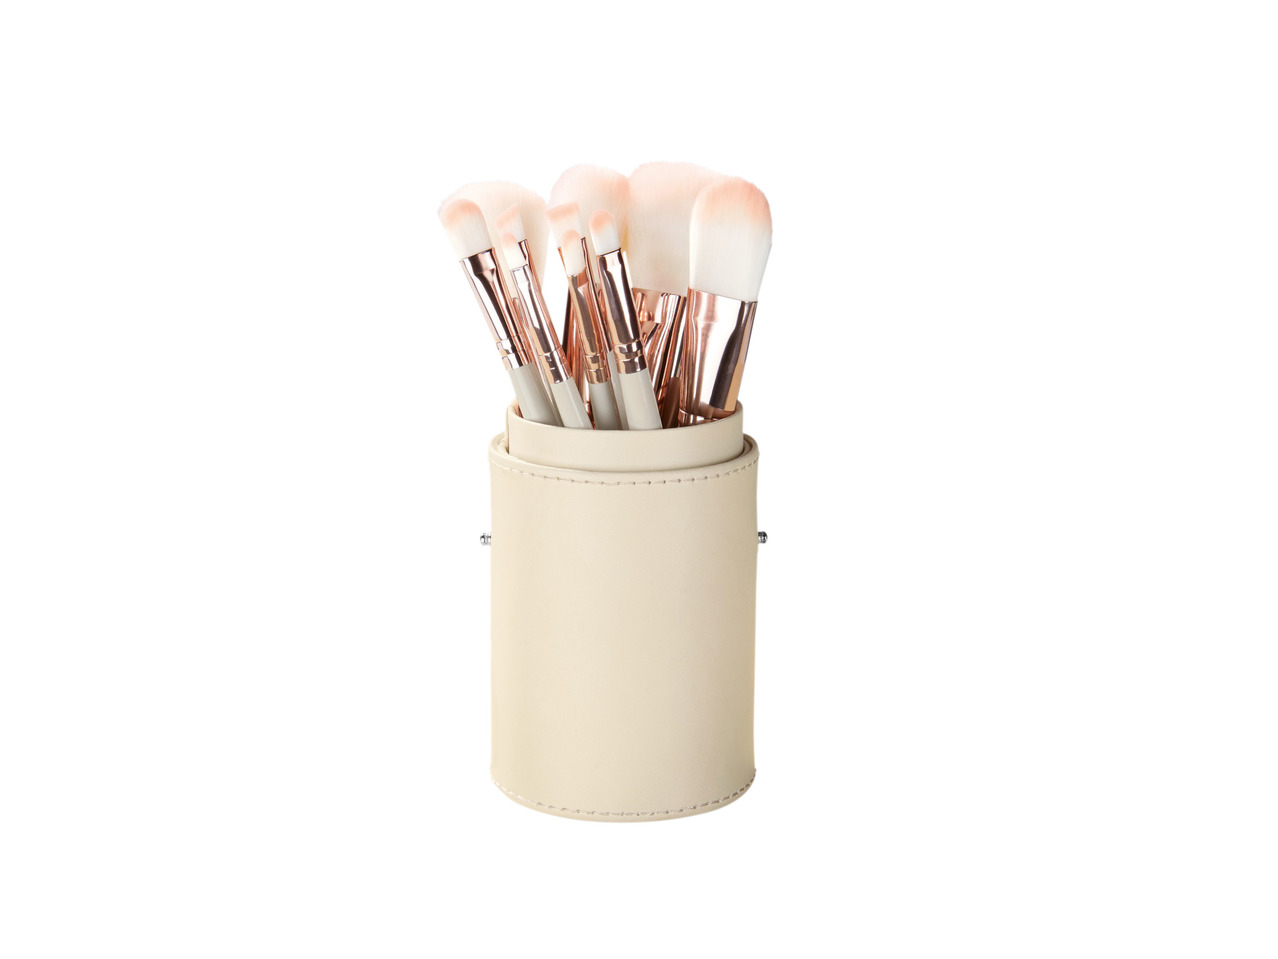 MIOMARE Professional Cosmetic Brush Set